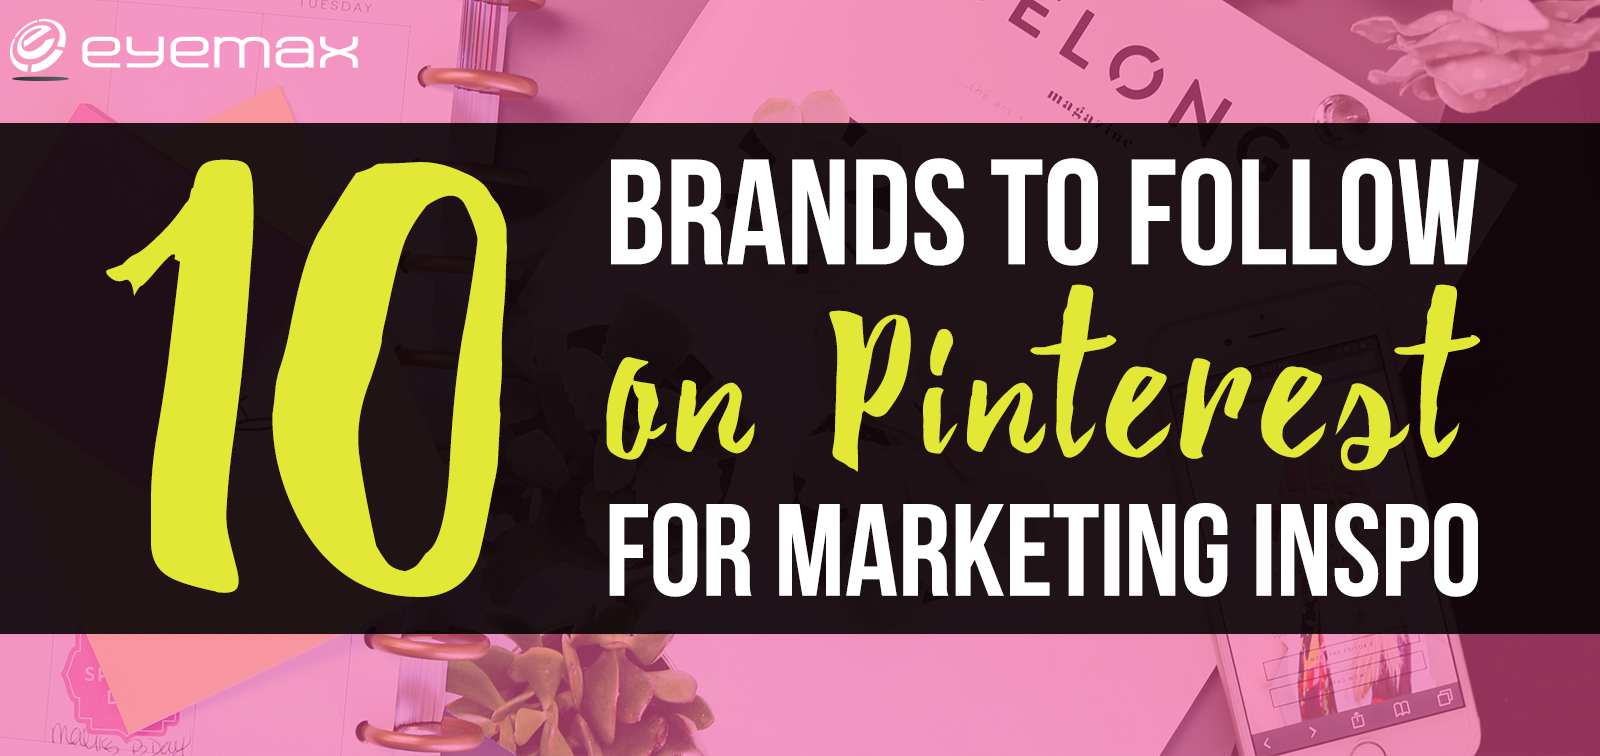 10 Brands to Follow on Pinterest for Marketing Inspo